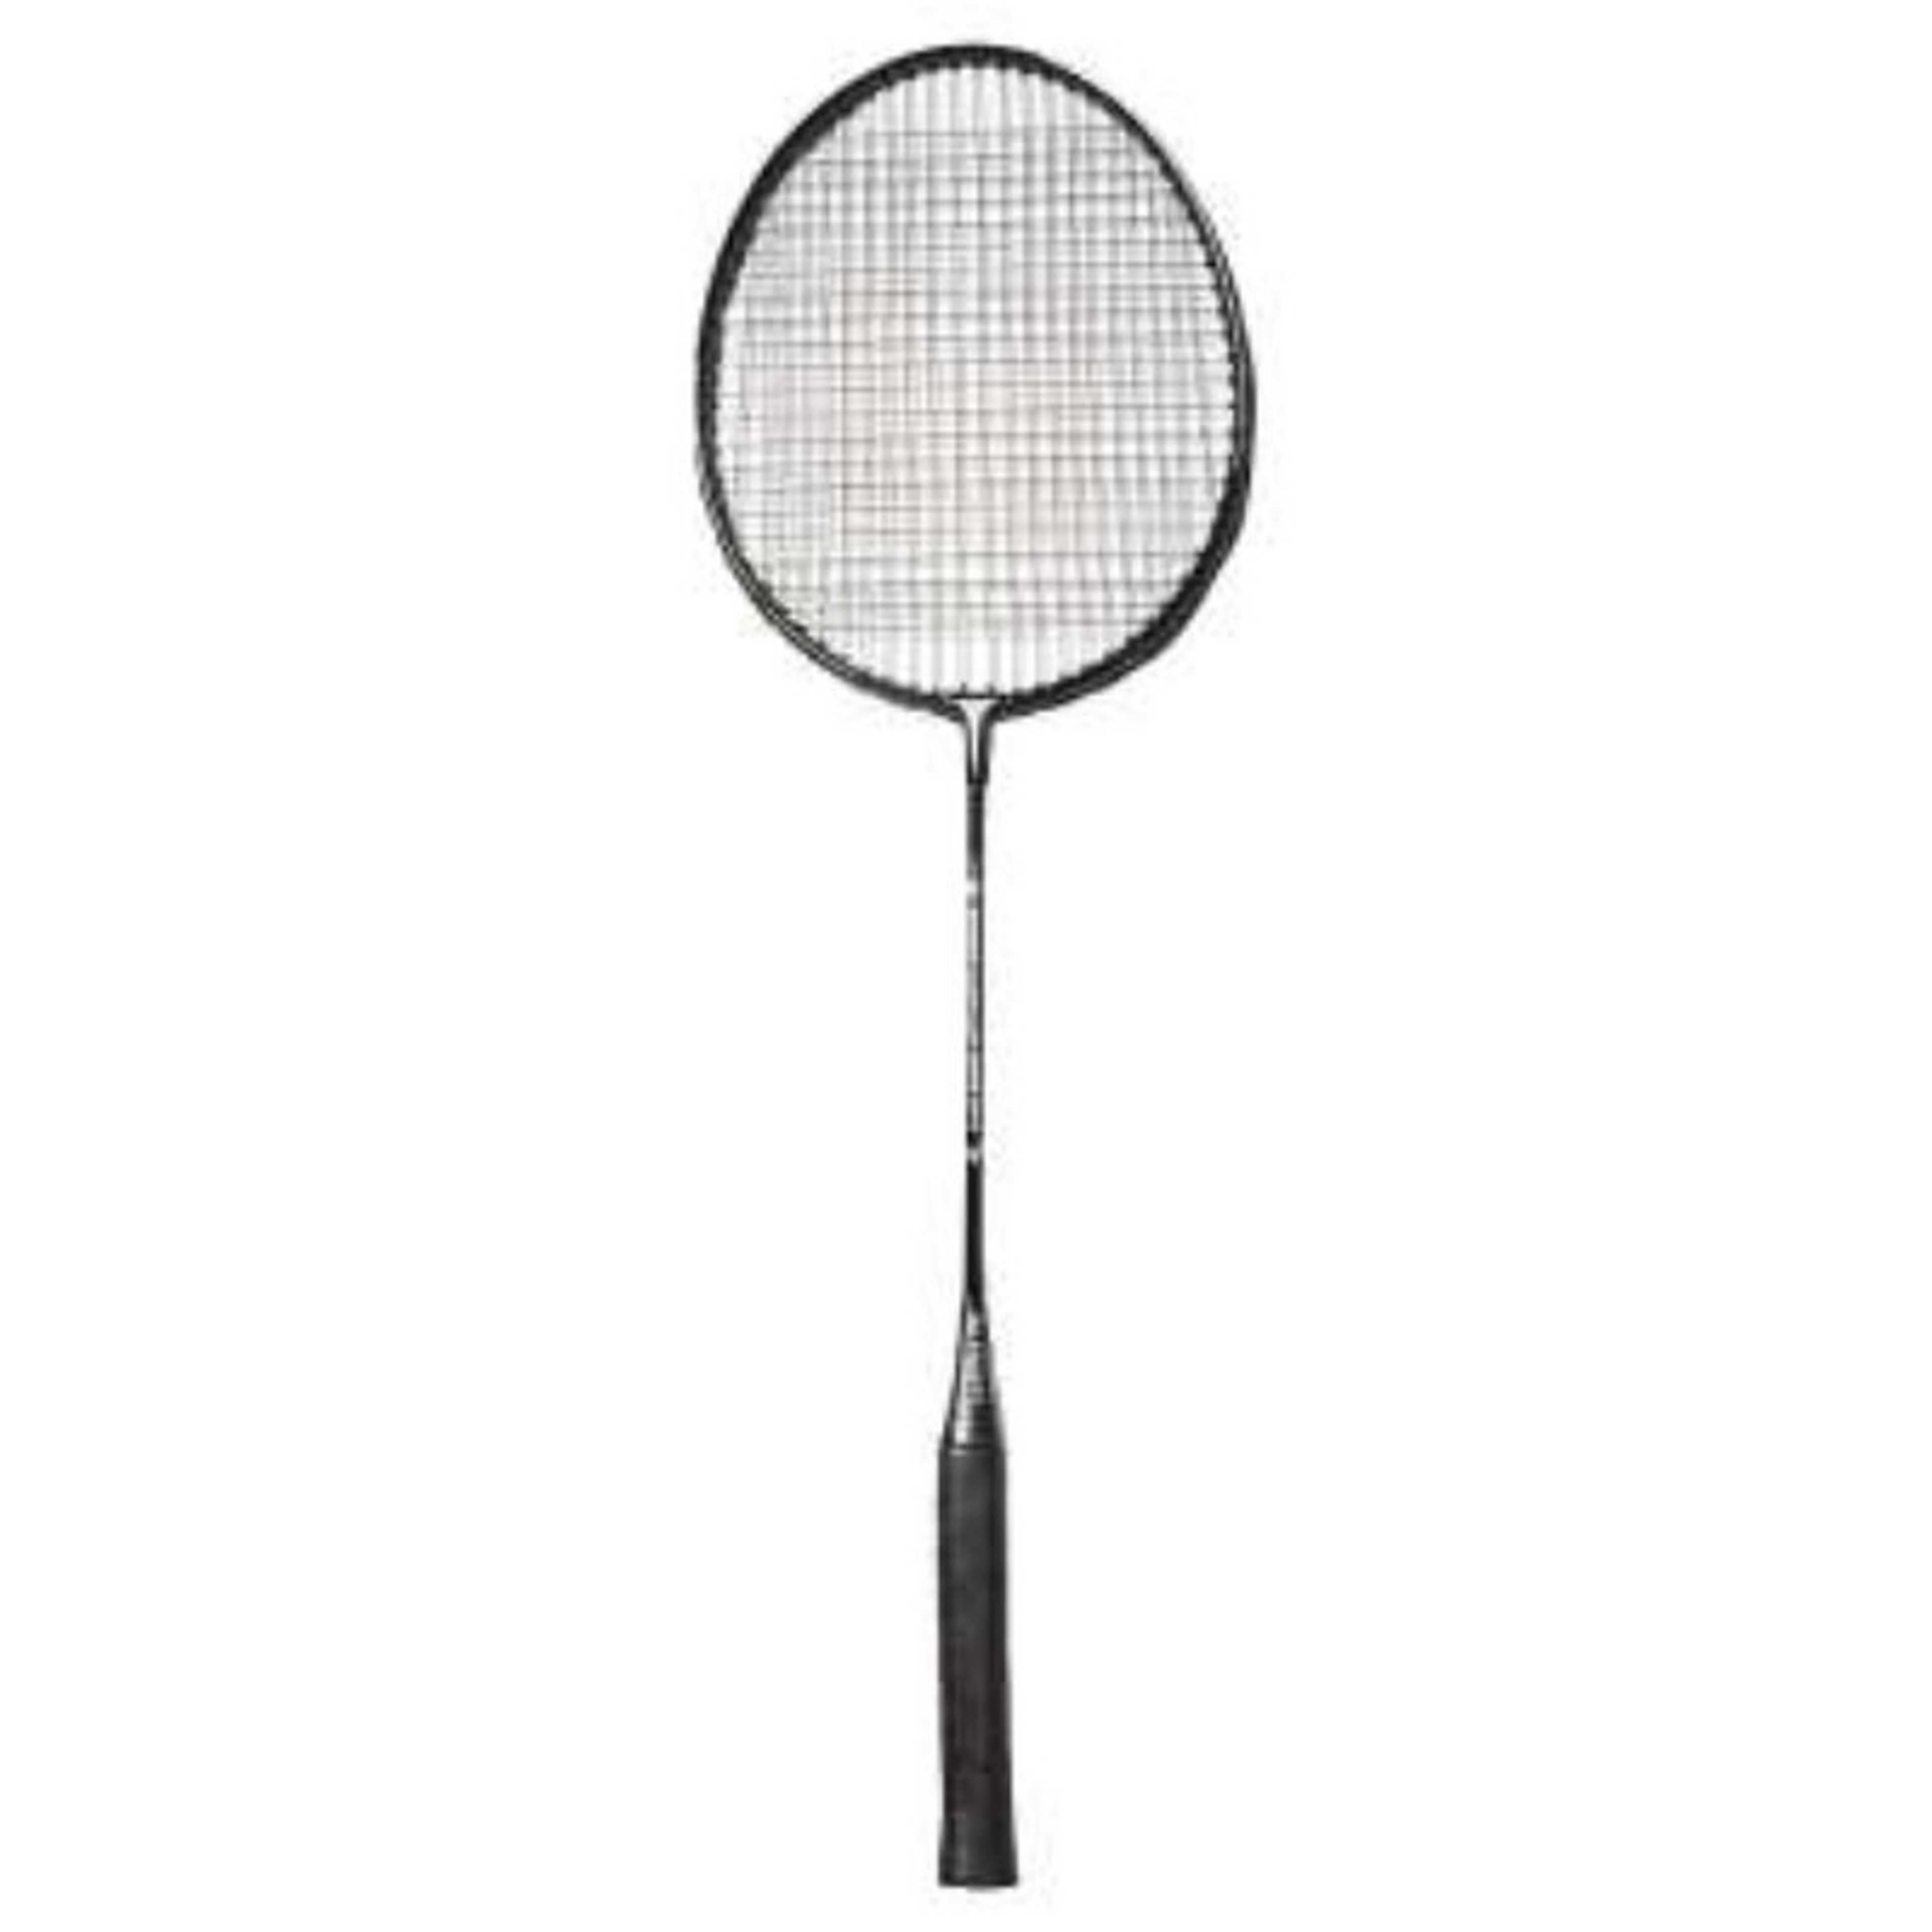 Pro-6070 Badminton Racket